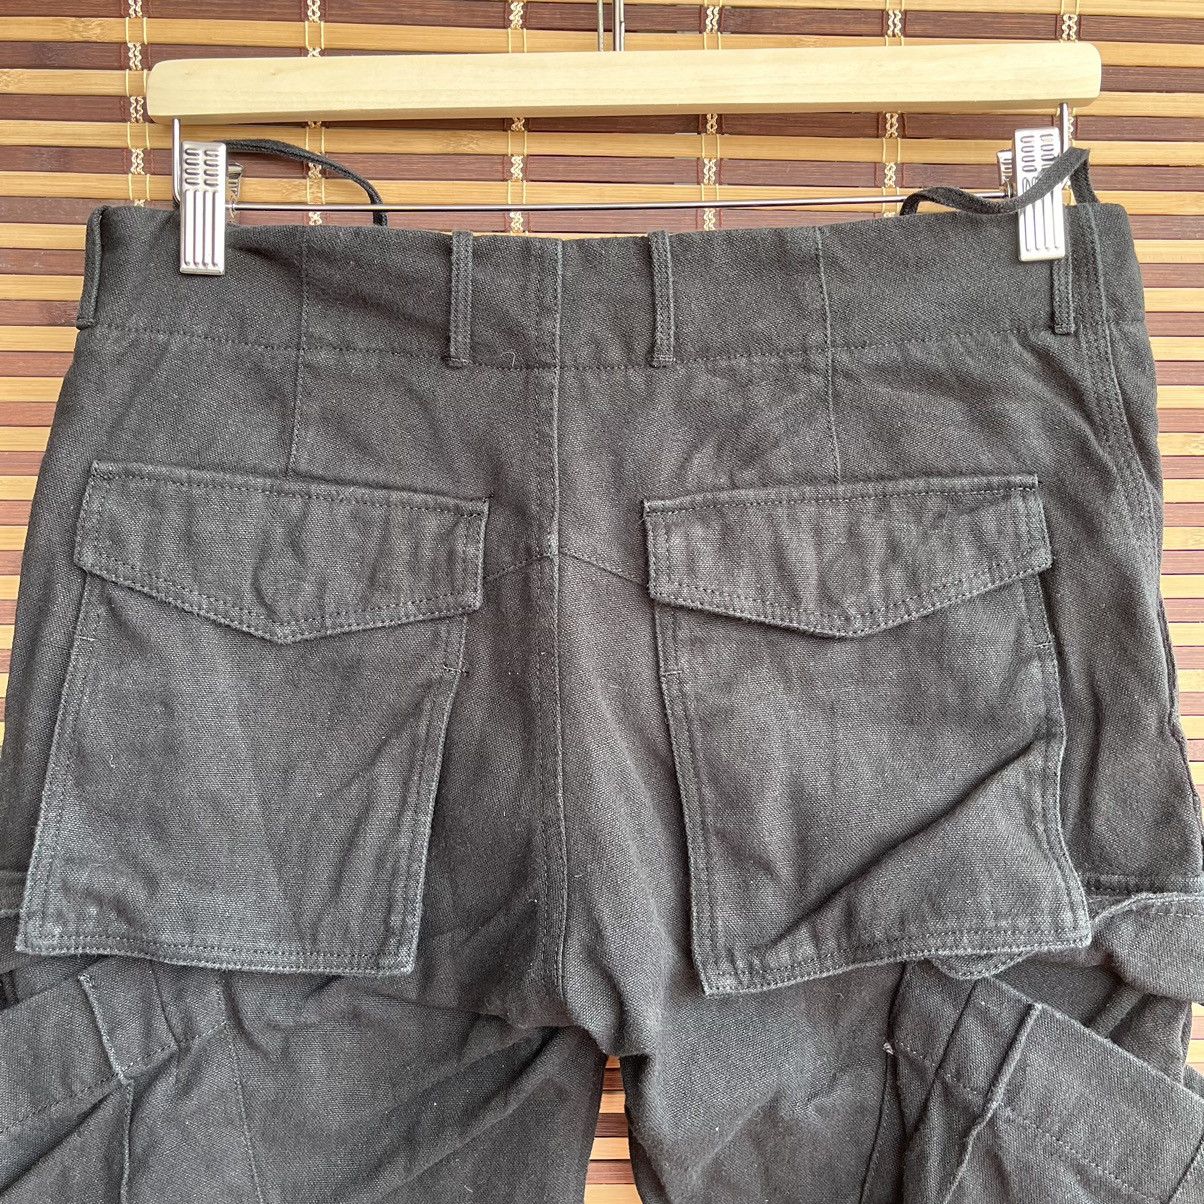 Seditionaries Dirain Tactical Cropped Pants Delta Store - 17